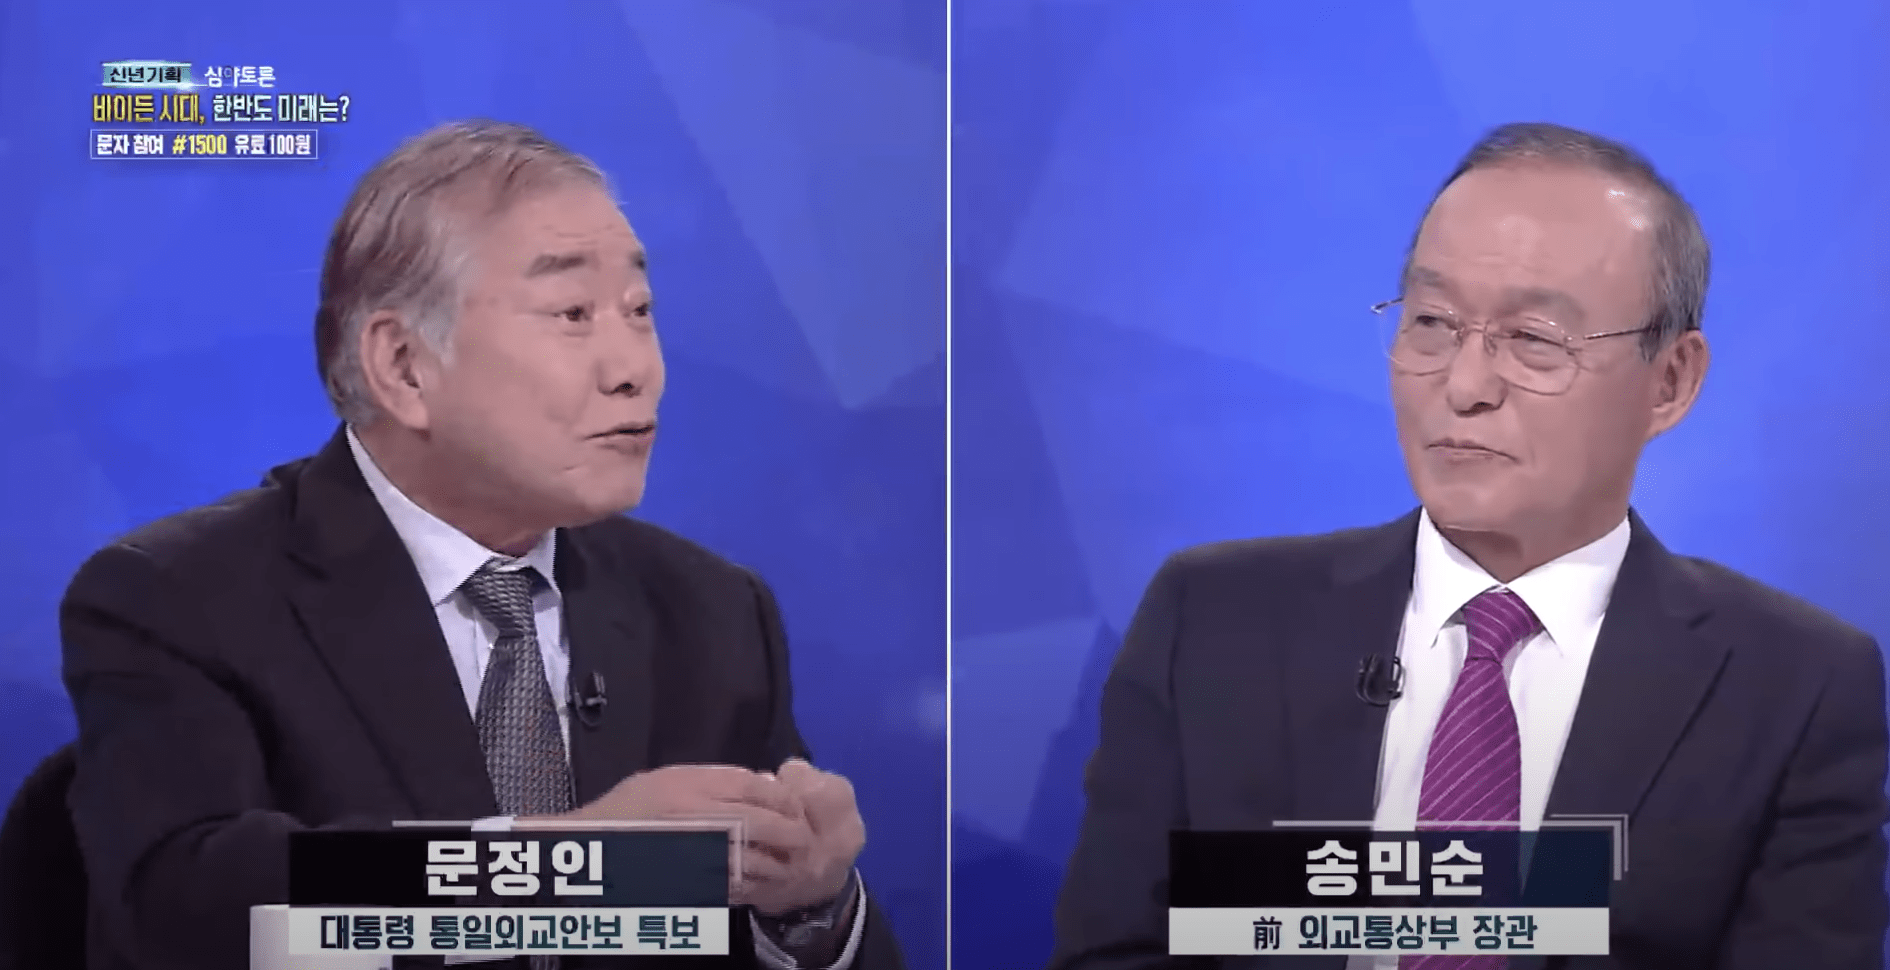 Debate on the Future of the Korean Peninsula and Biden Administration